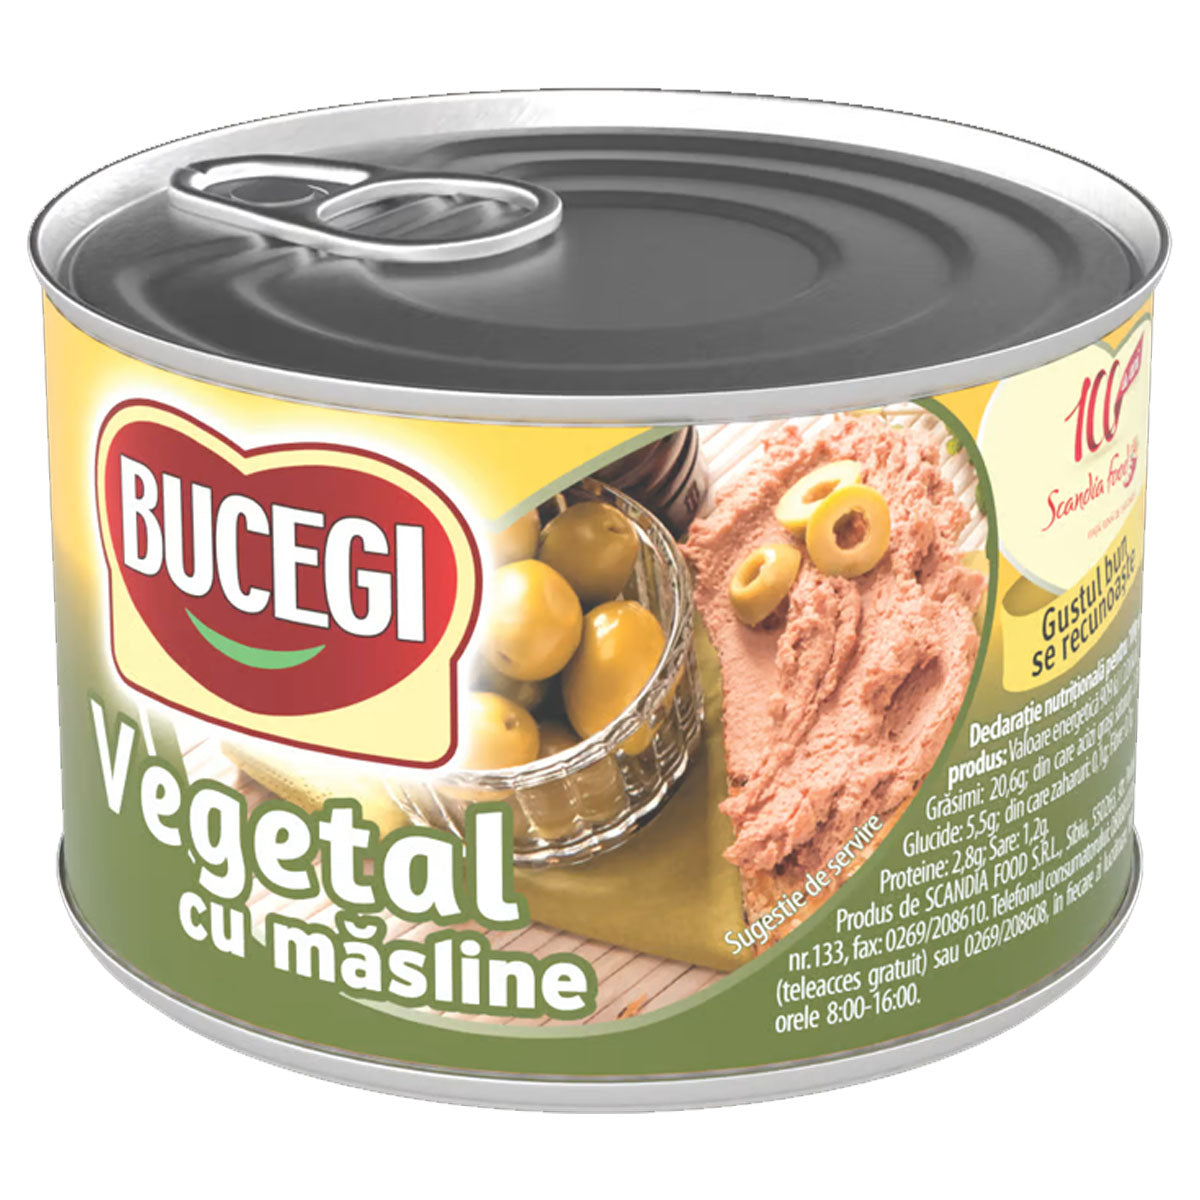 Bucegi - Vegetable Pate with Olives (Vegetal Masline) - 200g - Continental Food Store